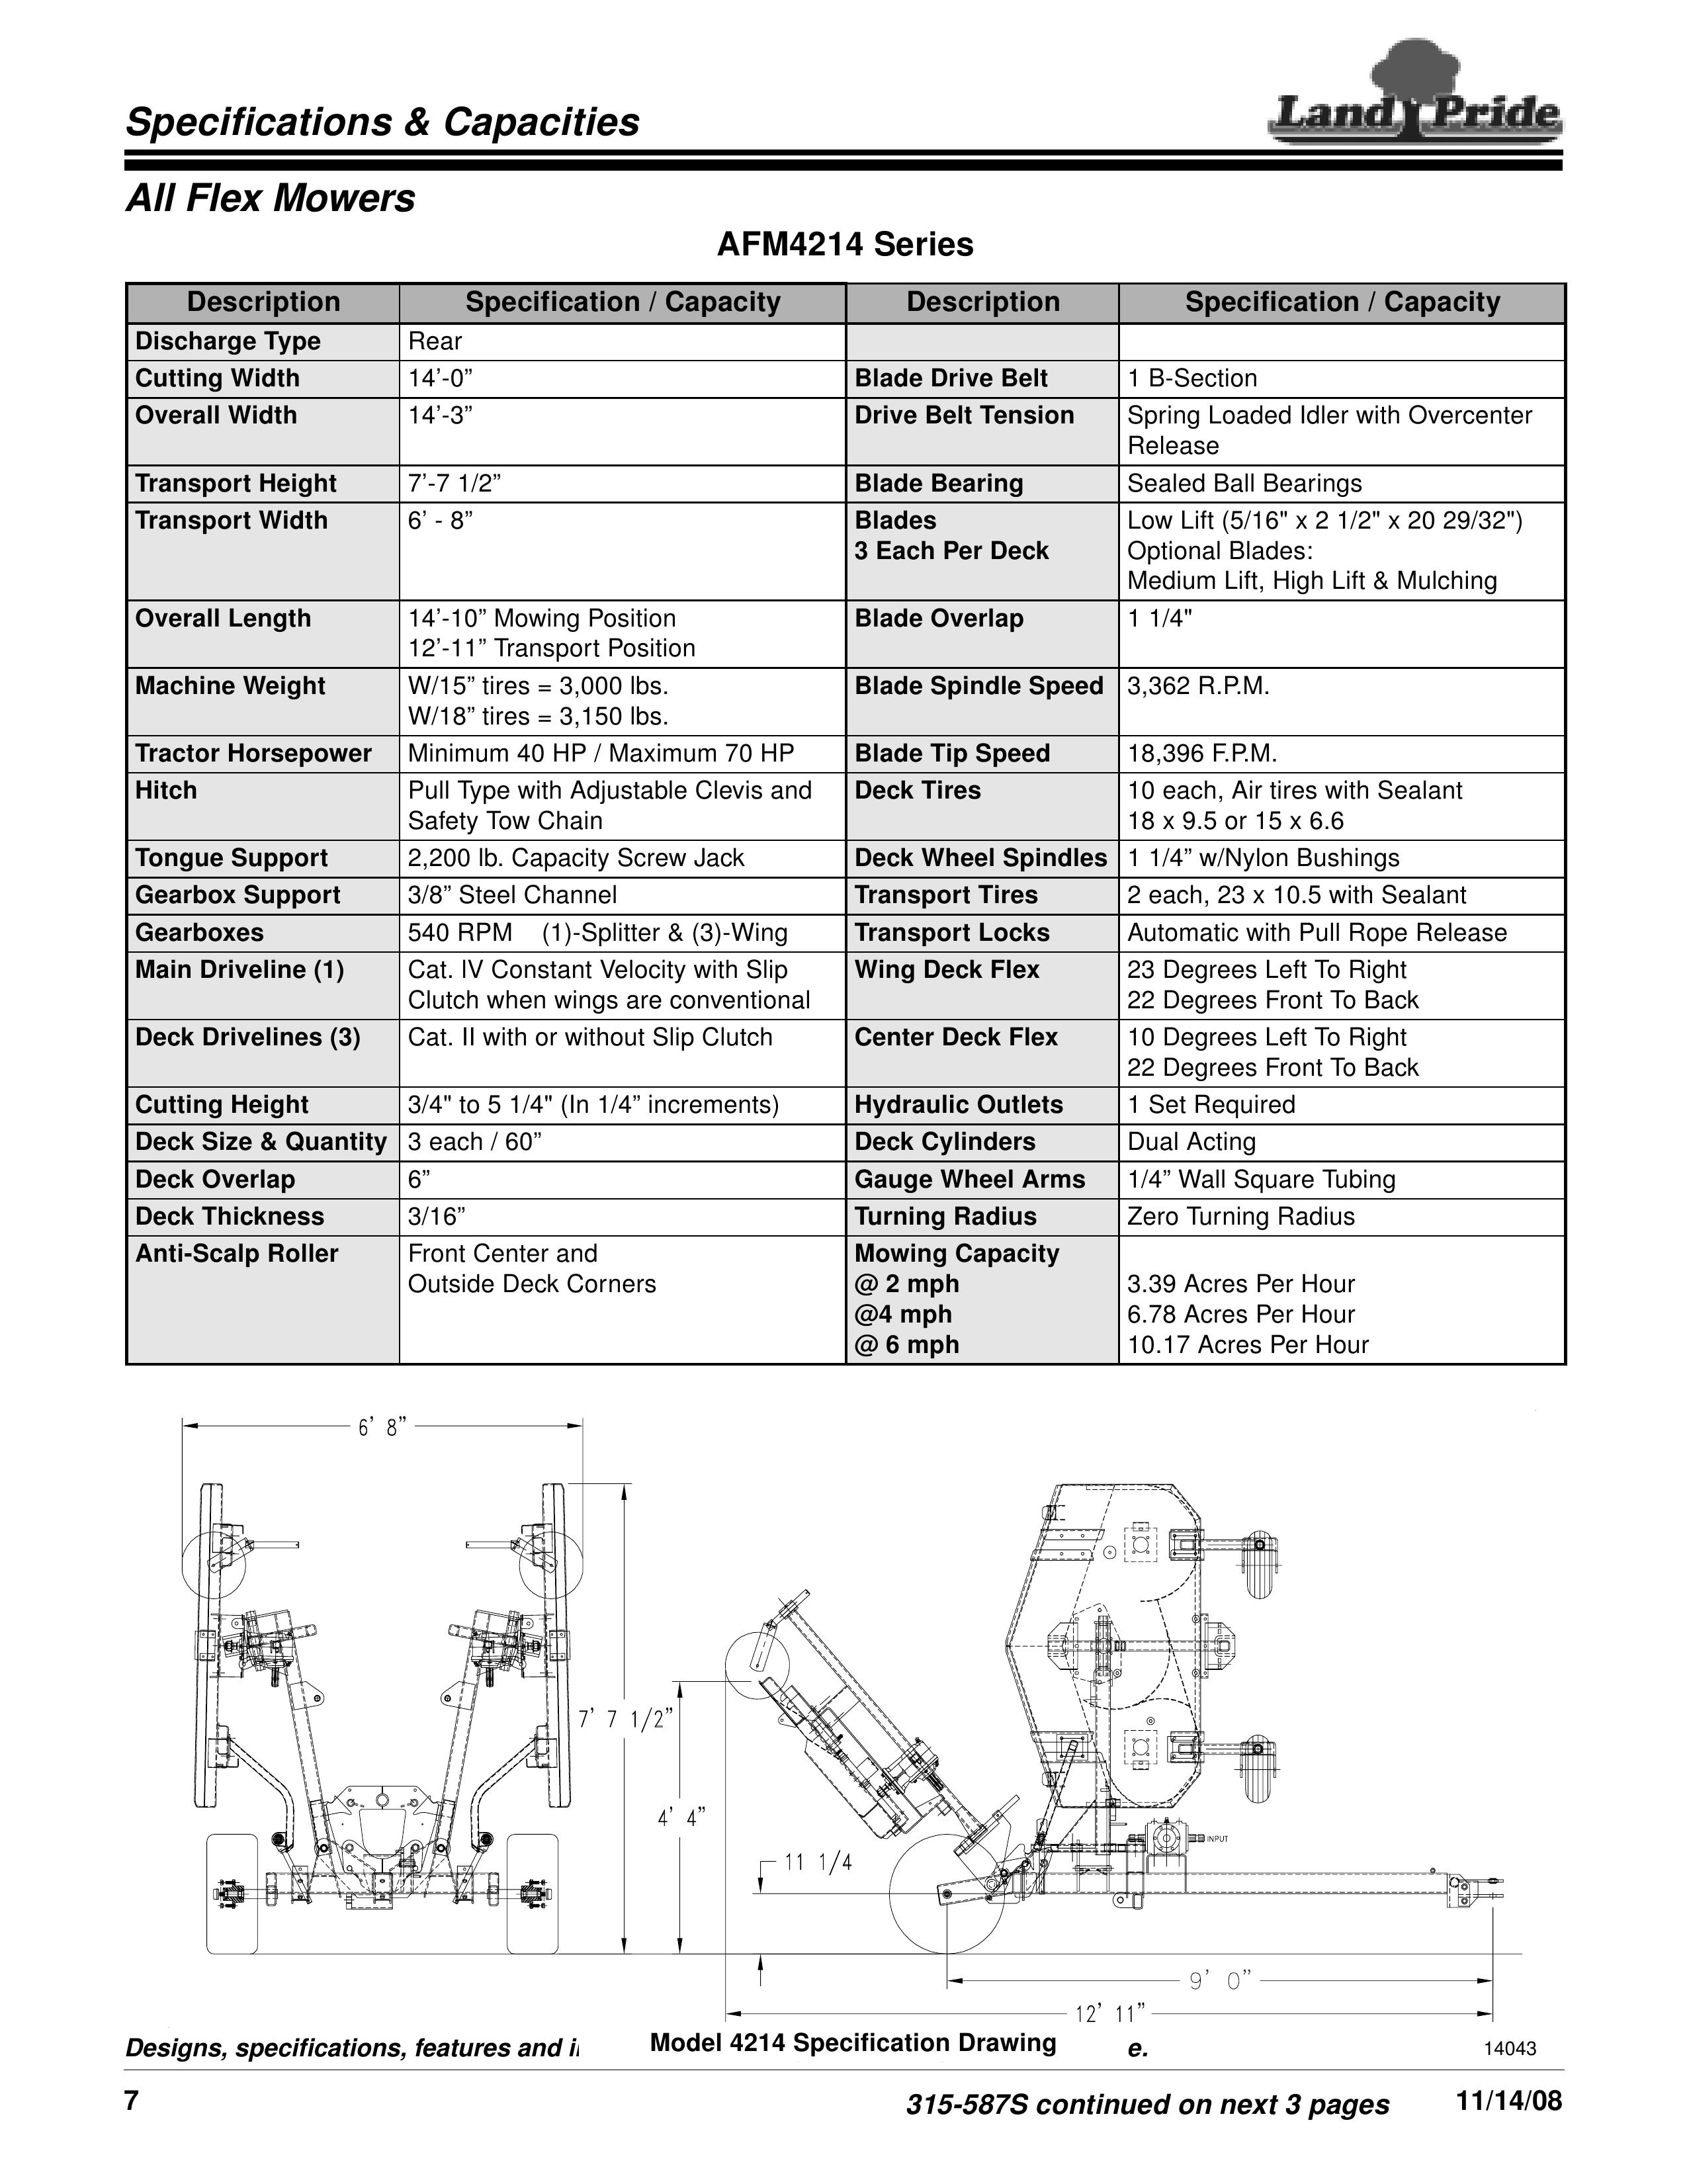 Land Pride AFM4214 Series Lawn Mower User Manual